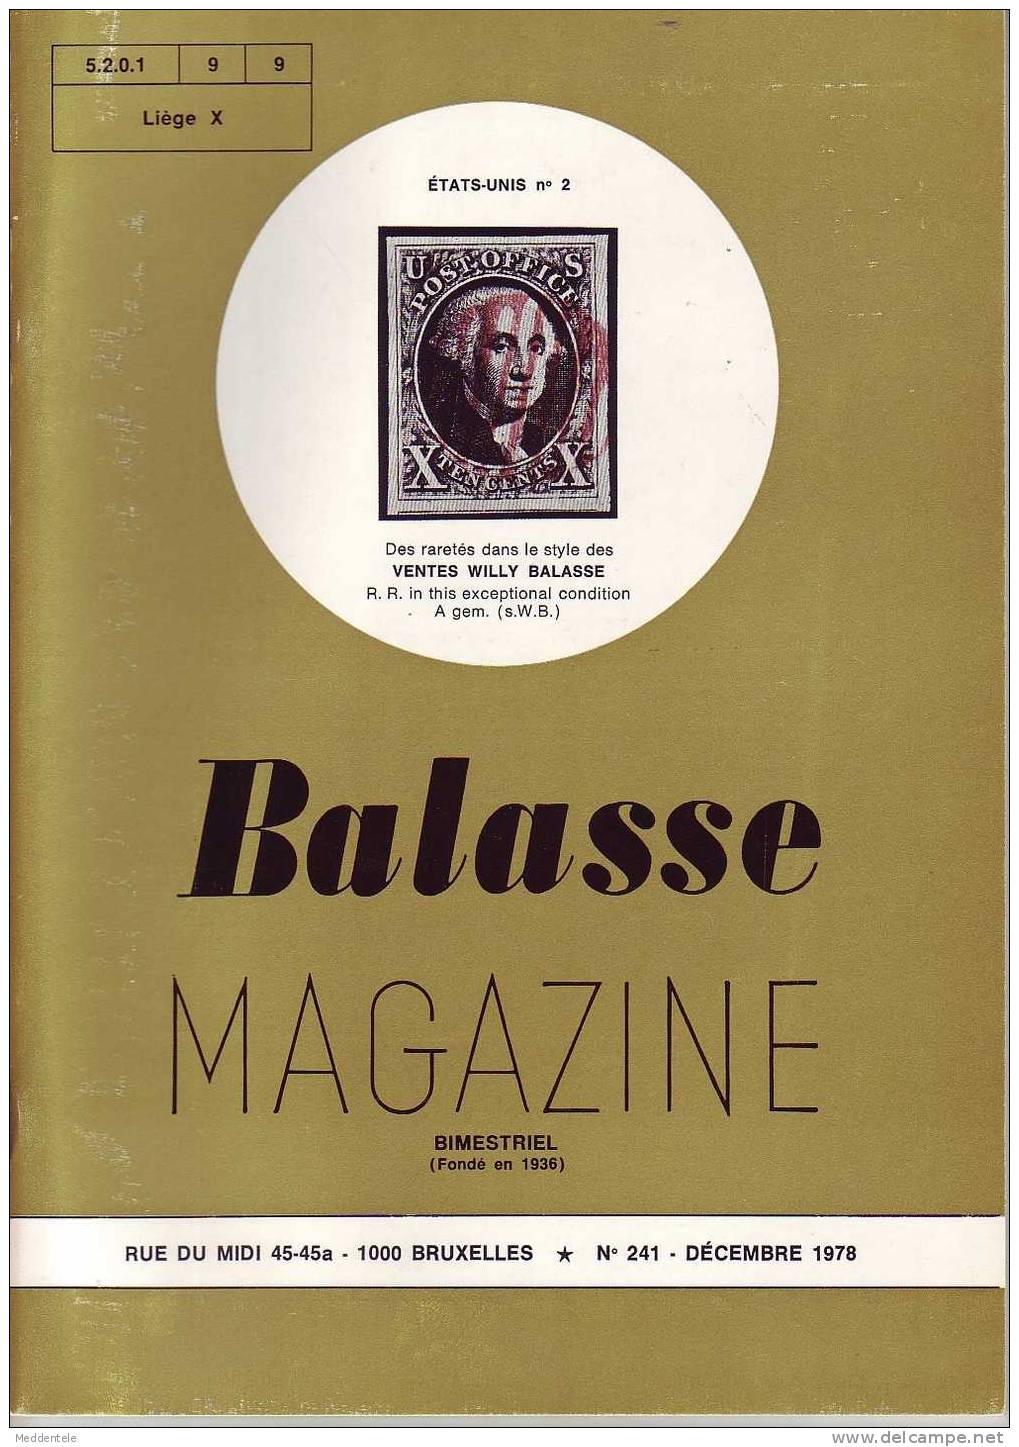 BALASSE MAGAZINE N° 241 - French (from 1941)